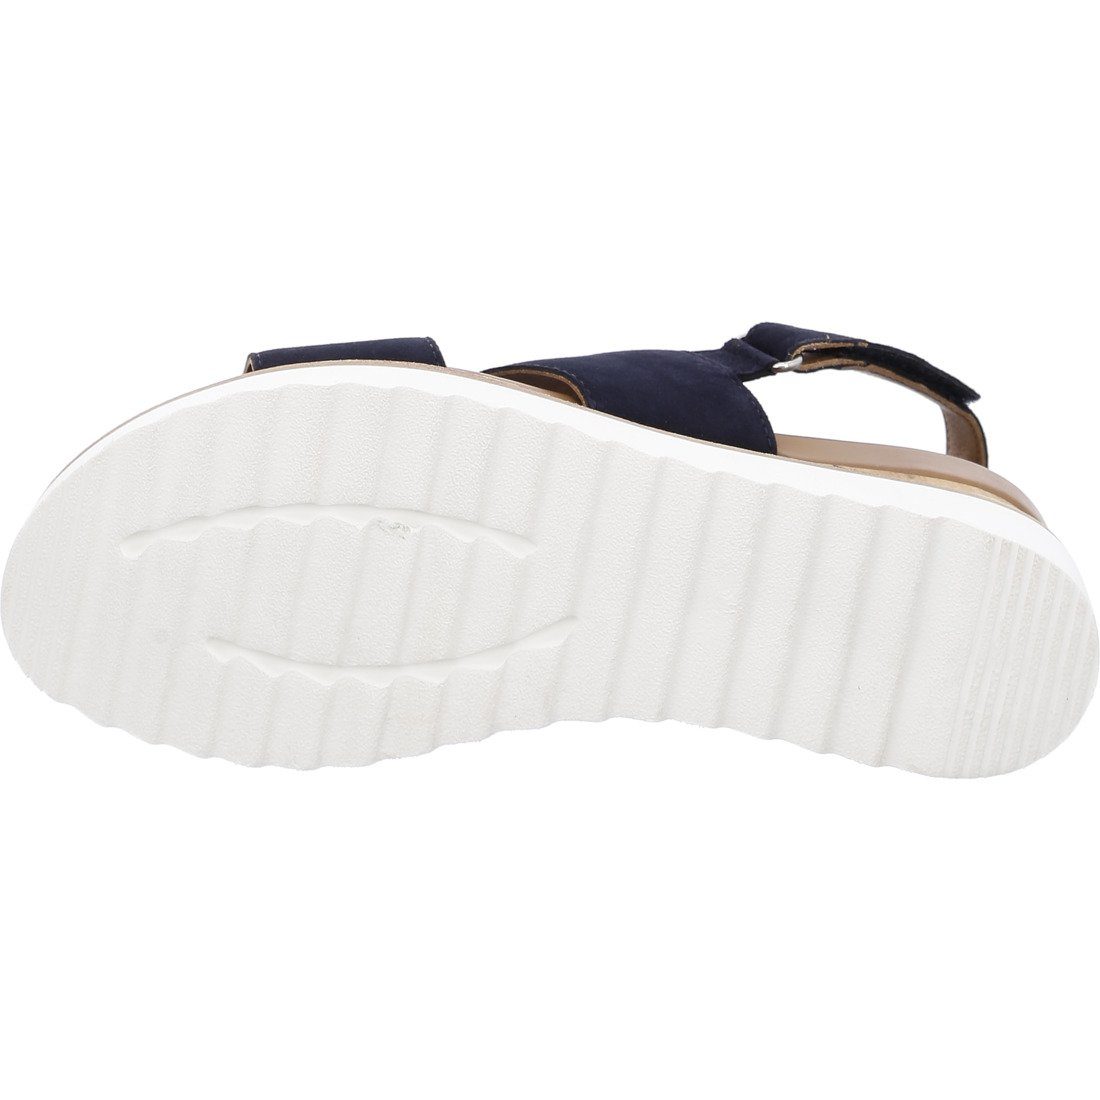 Valencia Rauleder Ara - Ara blau Sandalette Sandalette Schuhe, 045292